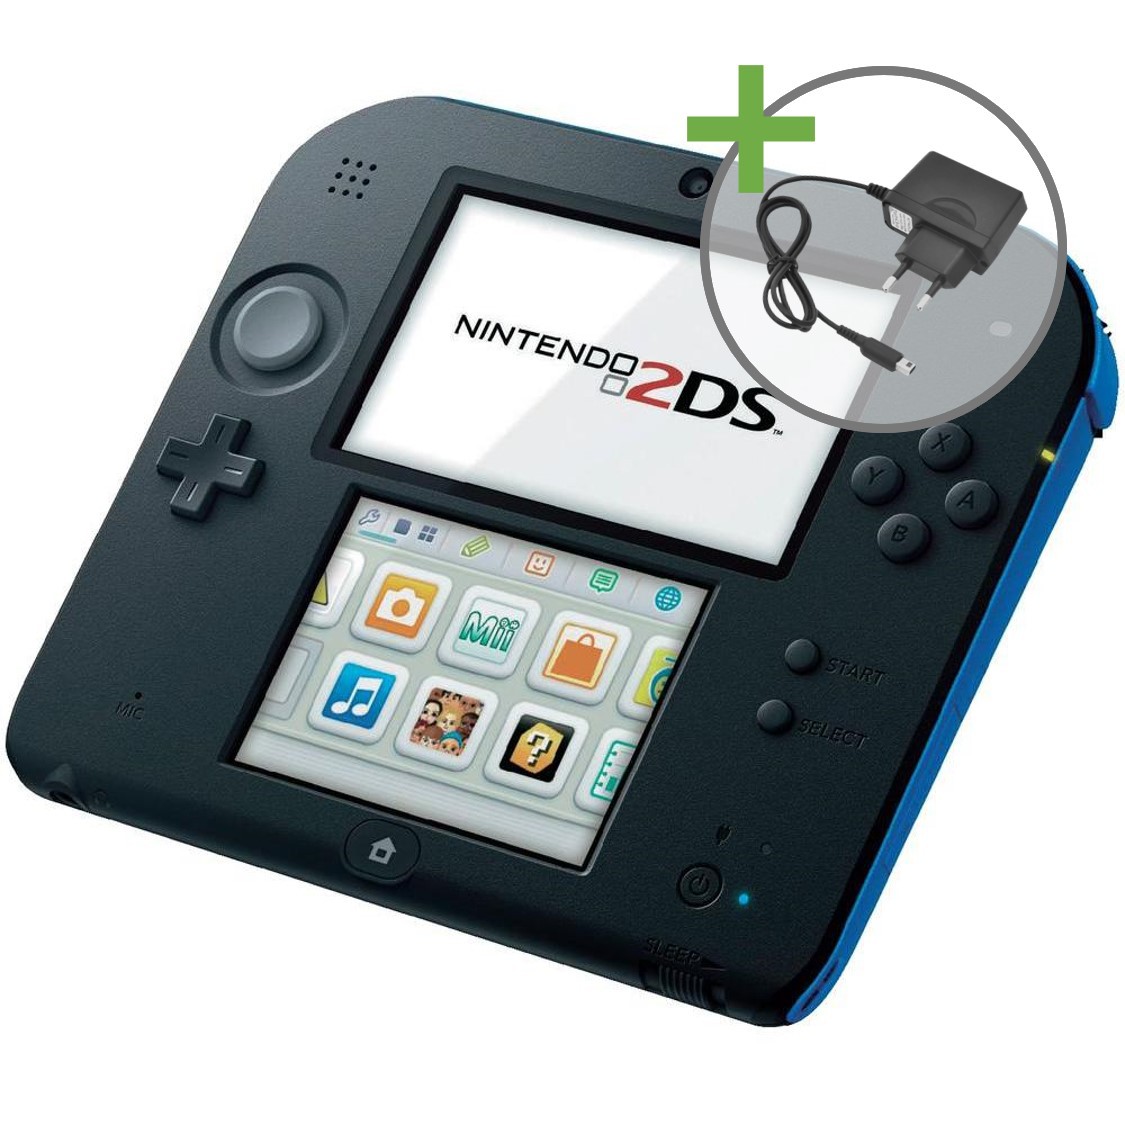 Nintendo 2DS - Black/Blue (Electric Blue) [Complete] - Nintendo 3DS Hardware - 2